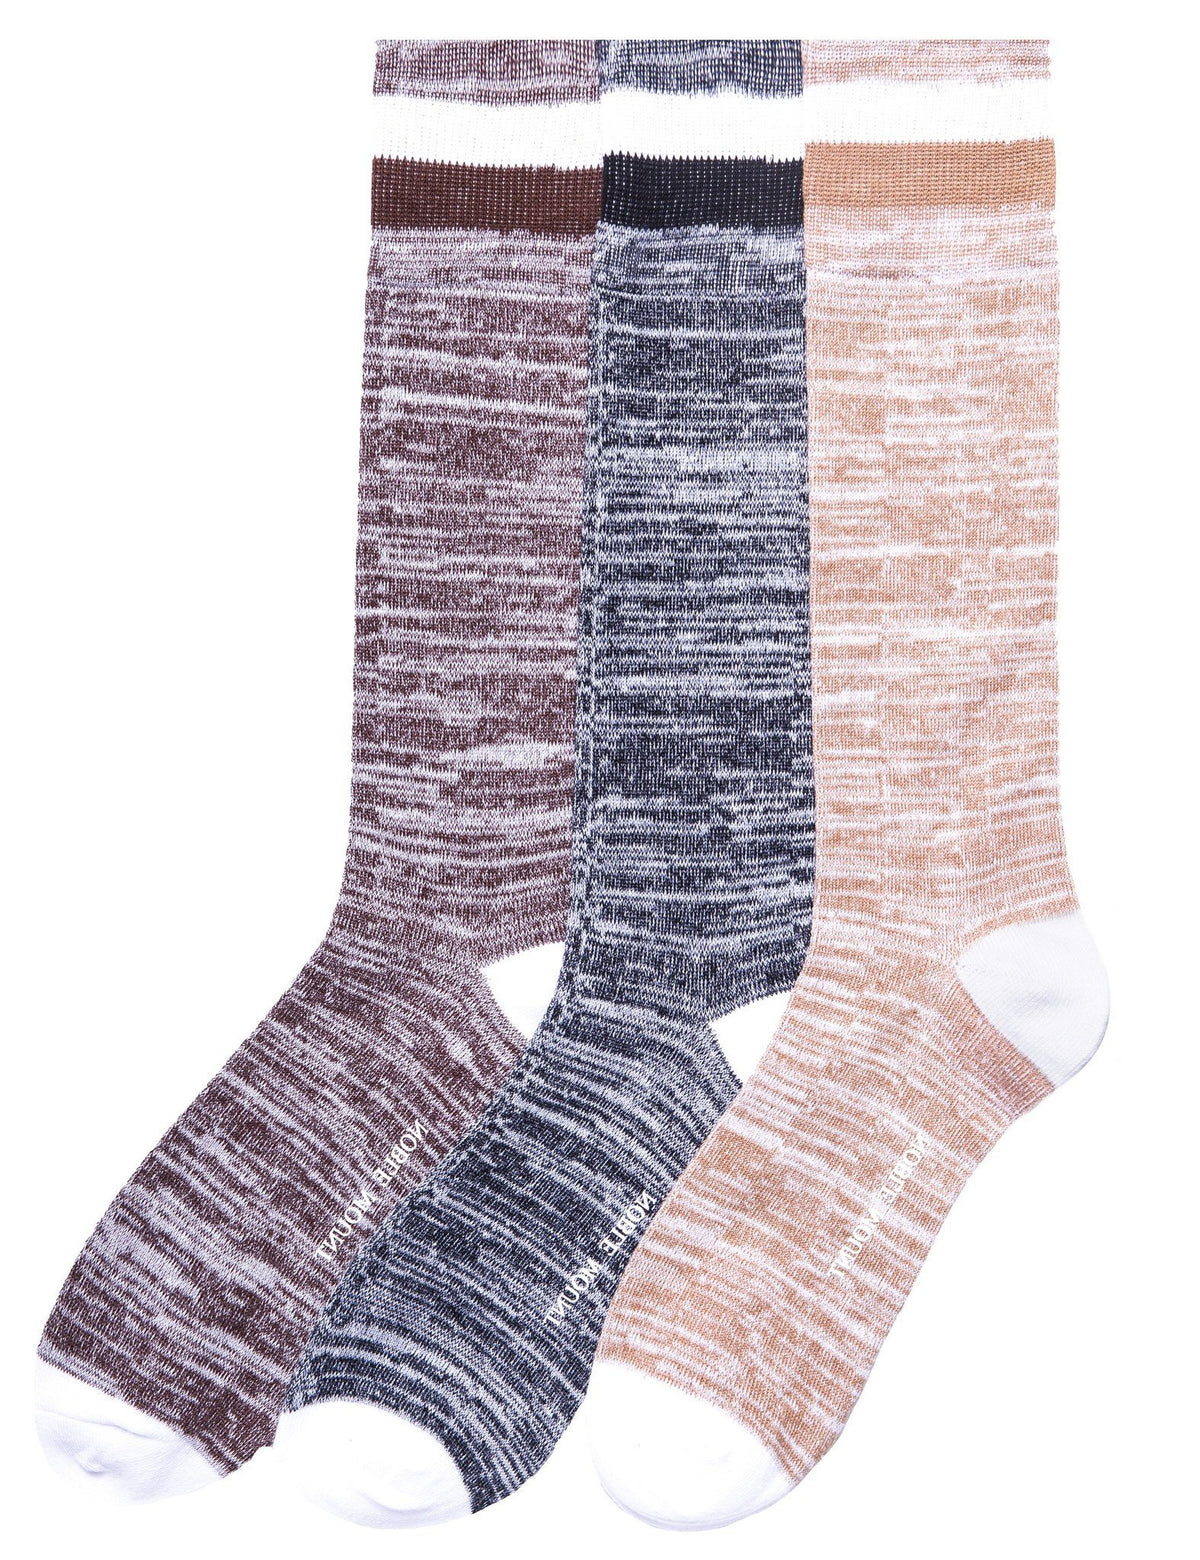 Men's 100% Acrylic Soft Marled Dress Socks 3-Pack - Set A5